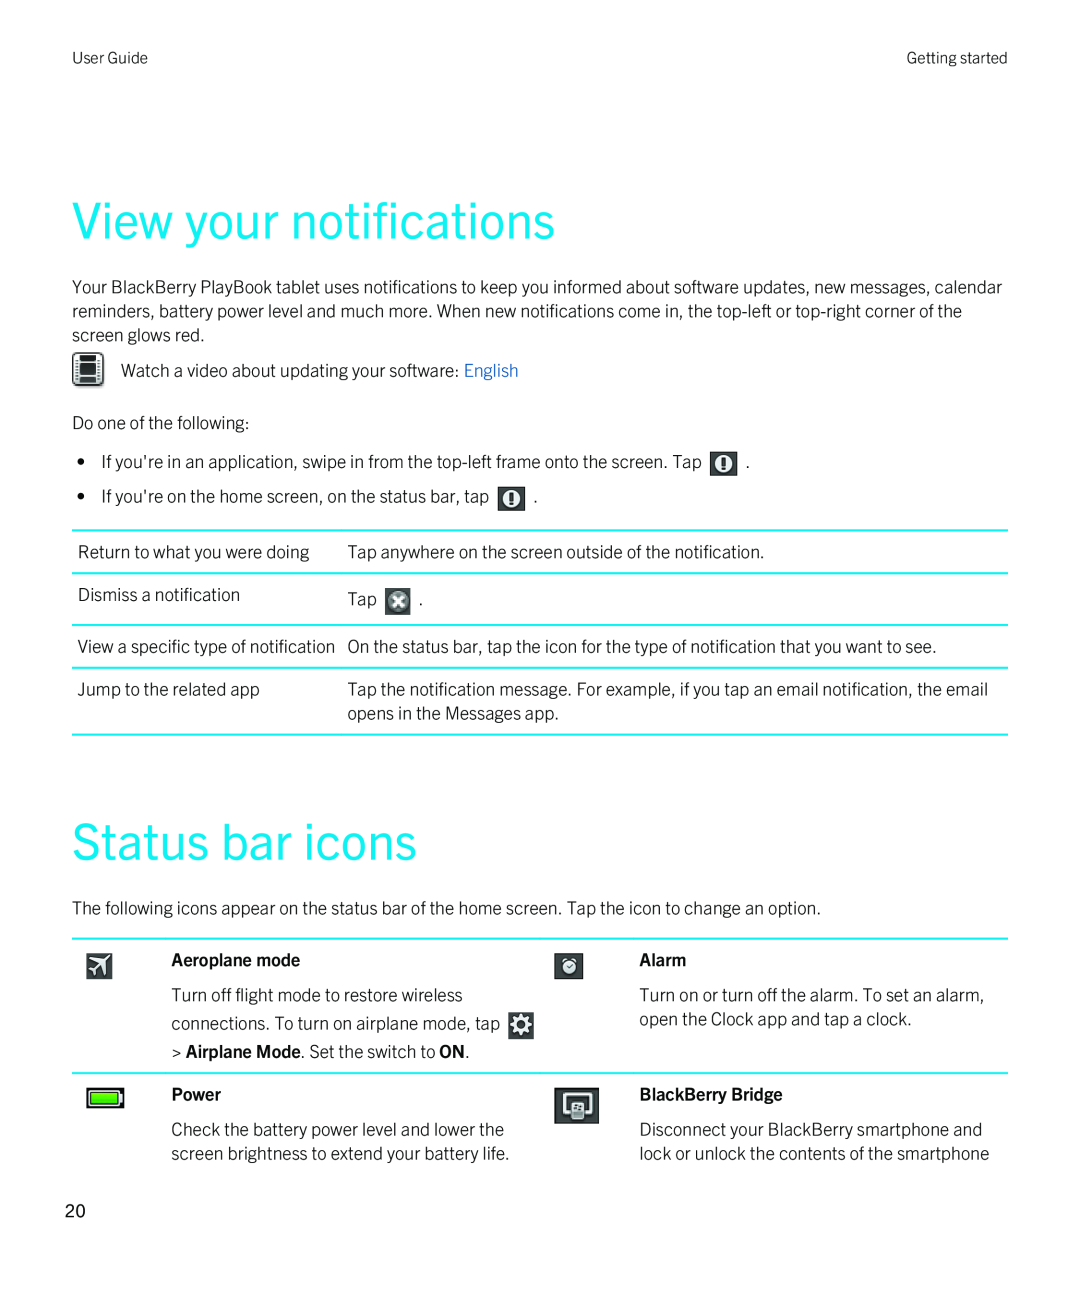 Blackberry 2.0.1 manual View your notifications, Status bar icons, Aeroplane mode, Alarm, Power, BlackBerry Bridge 